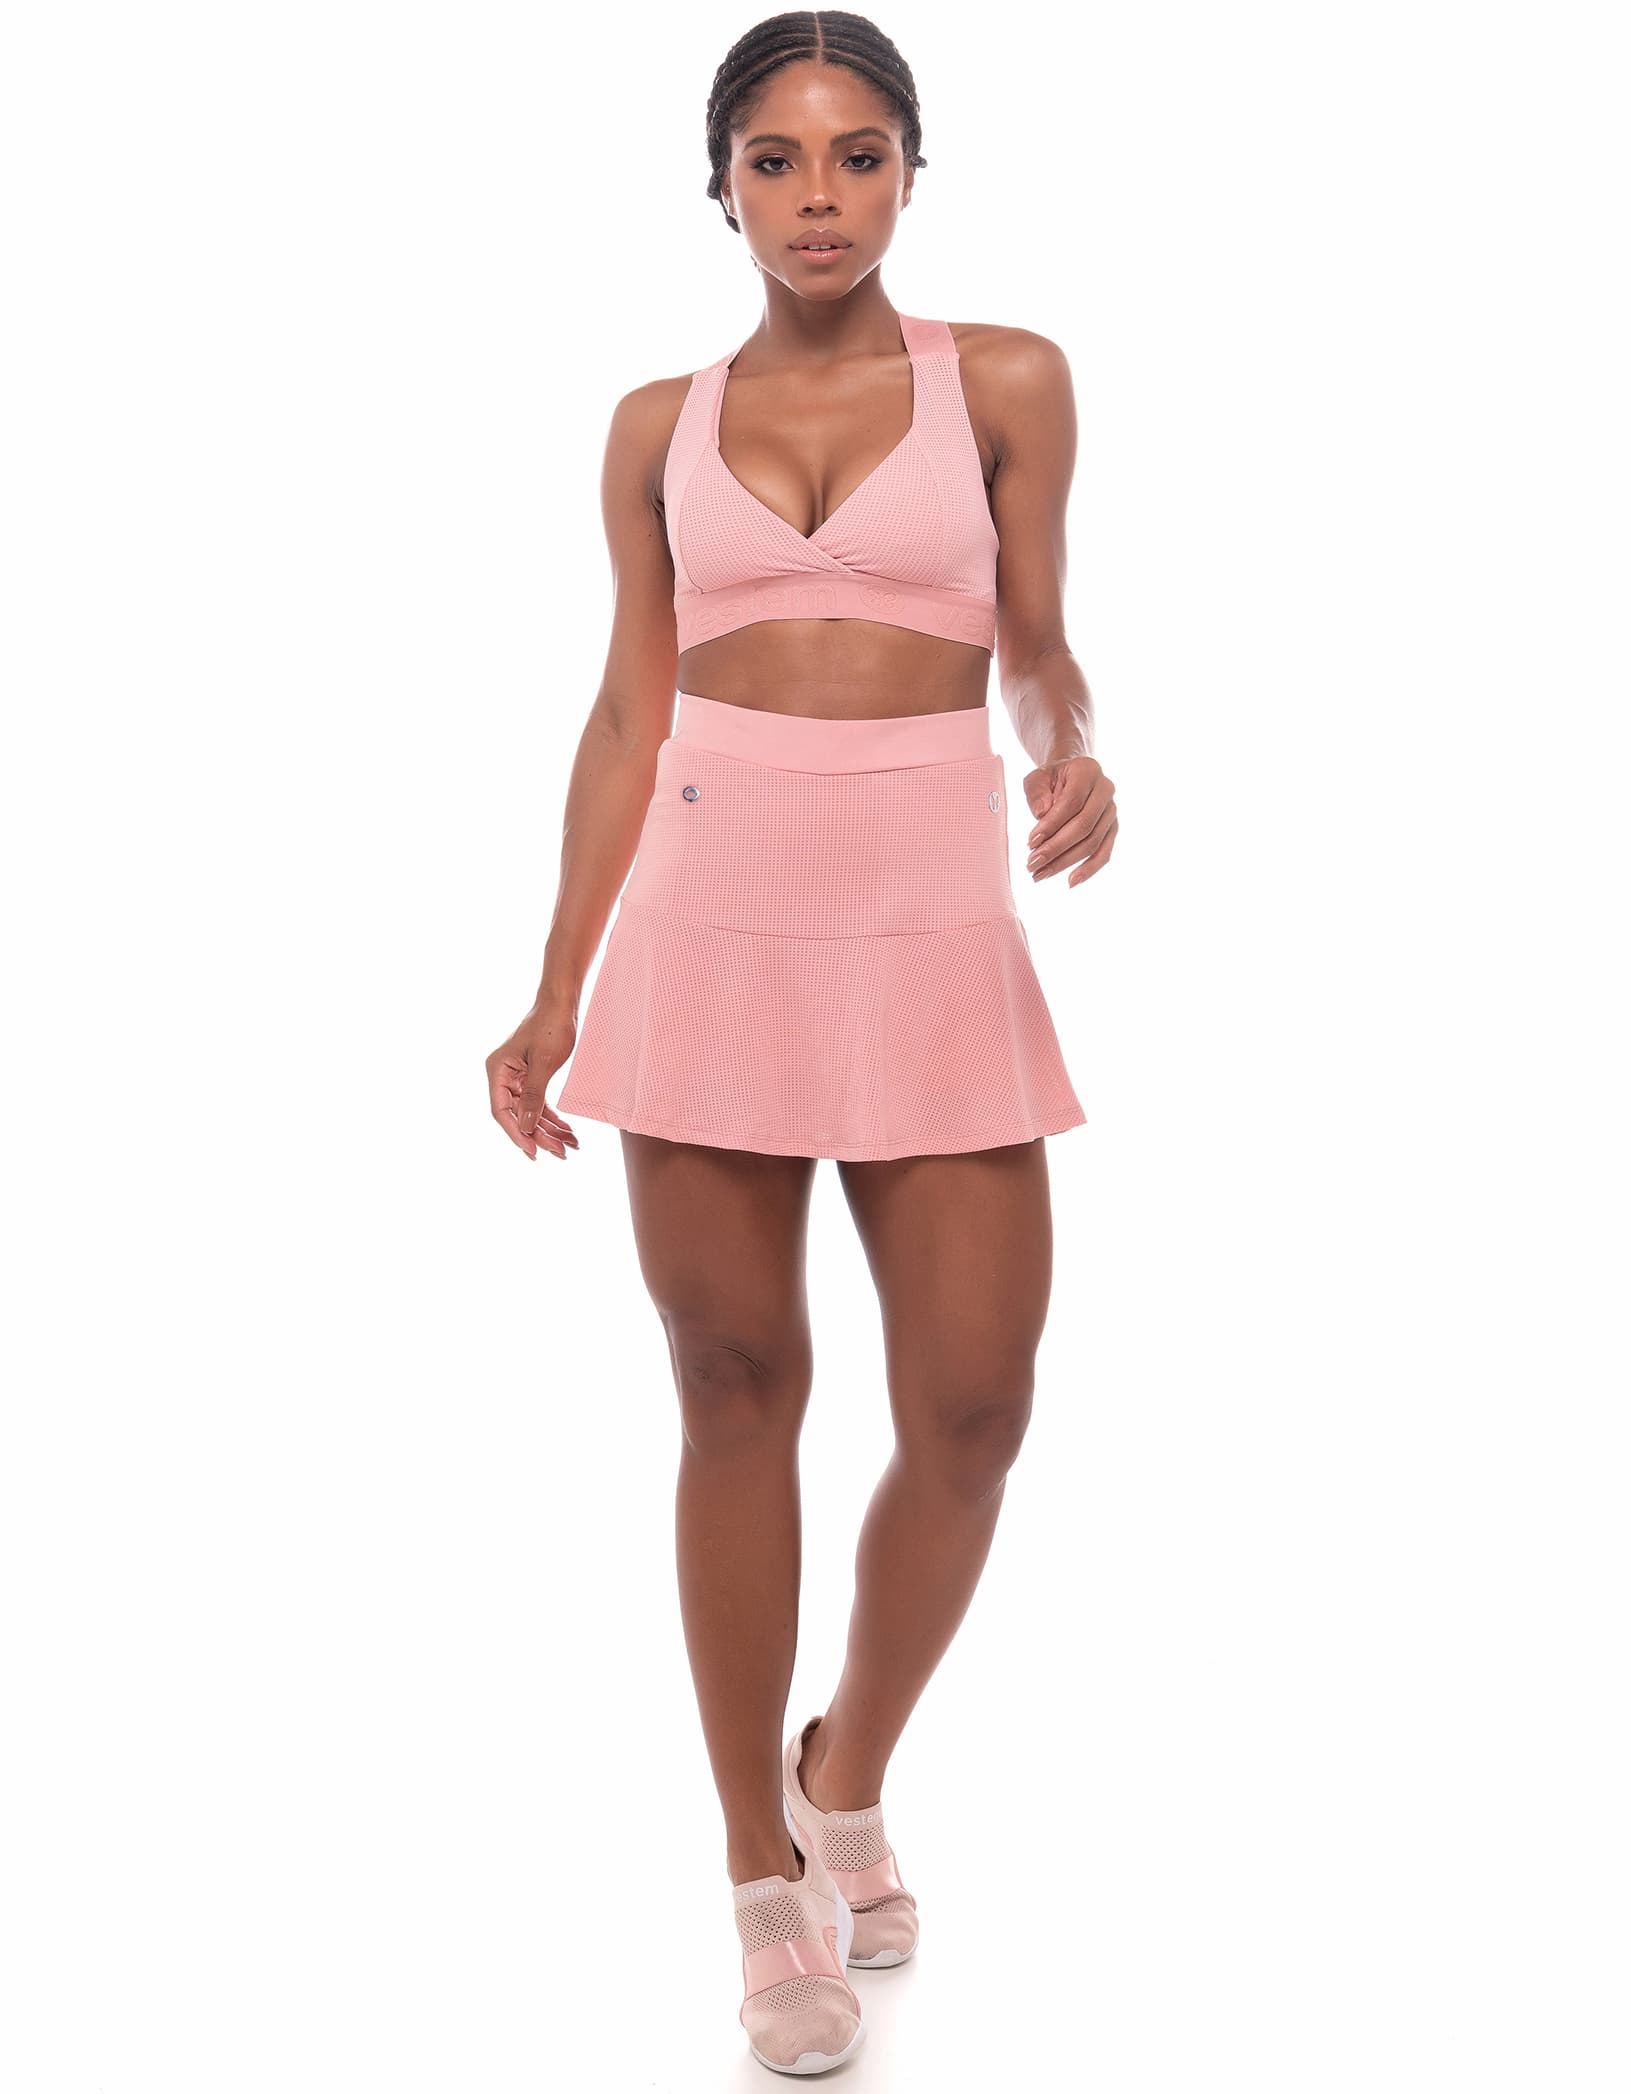 Vestem - Skirt Leblon pink Romance - SA146C0243